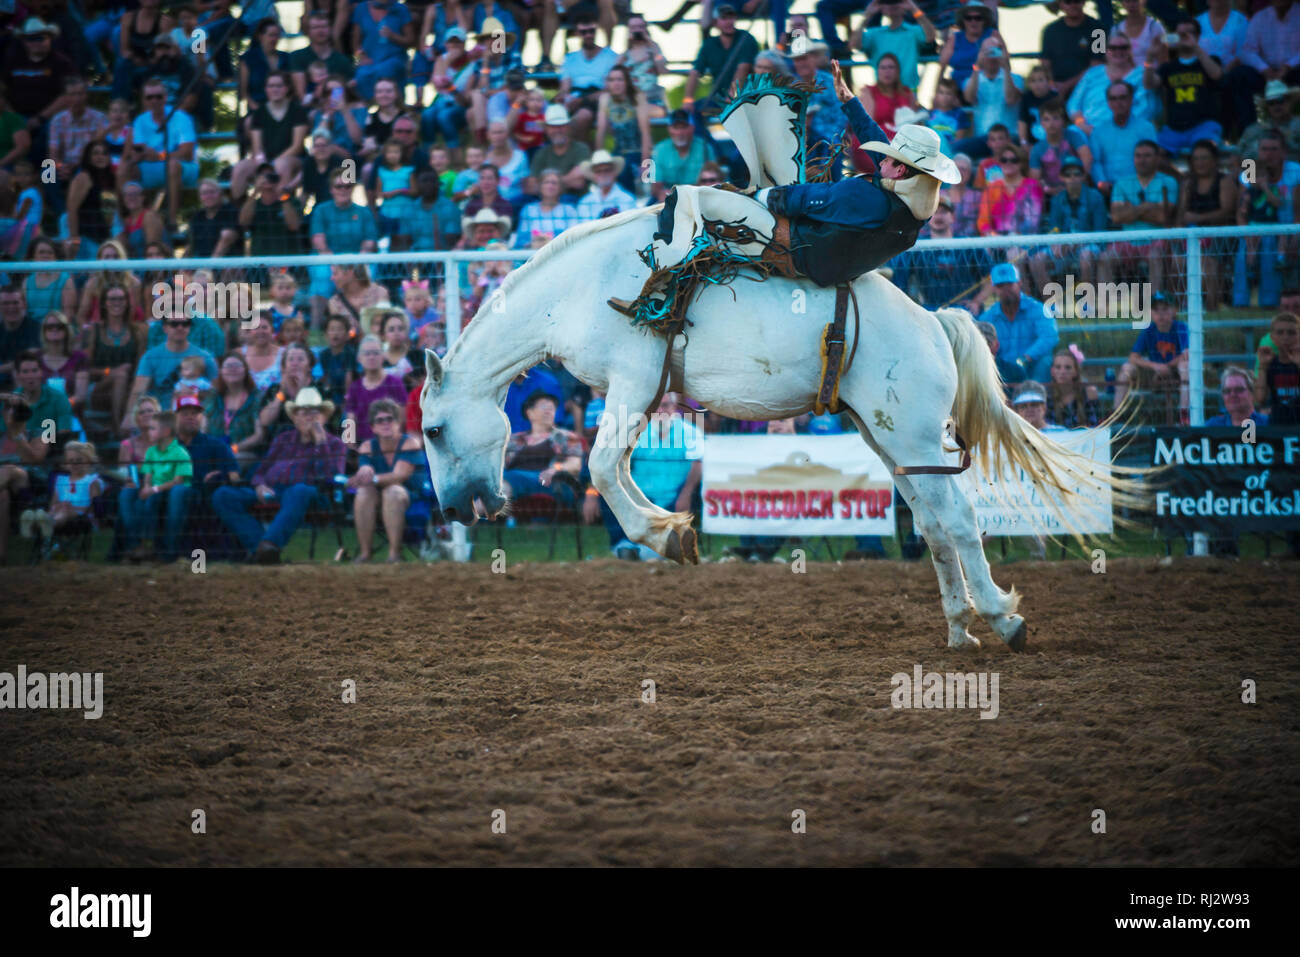 Rodeo cowboy bareback riding event. Texas, USA Stock Photo